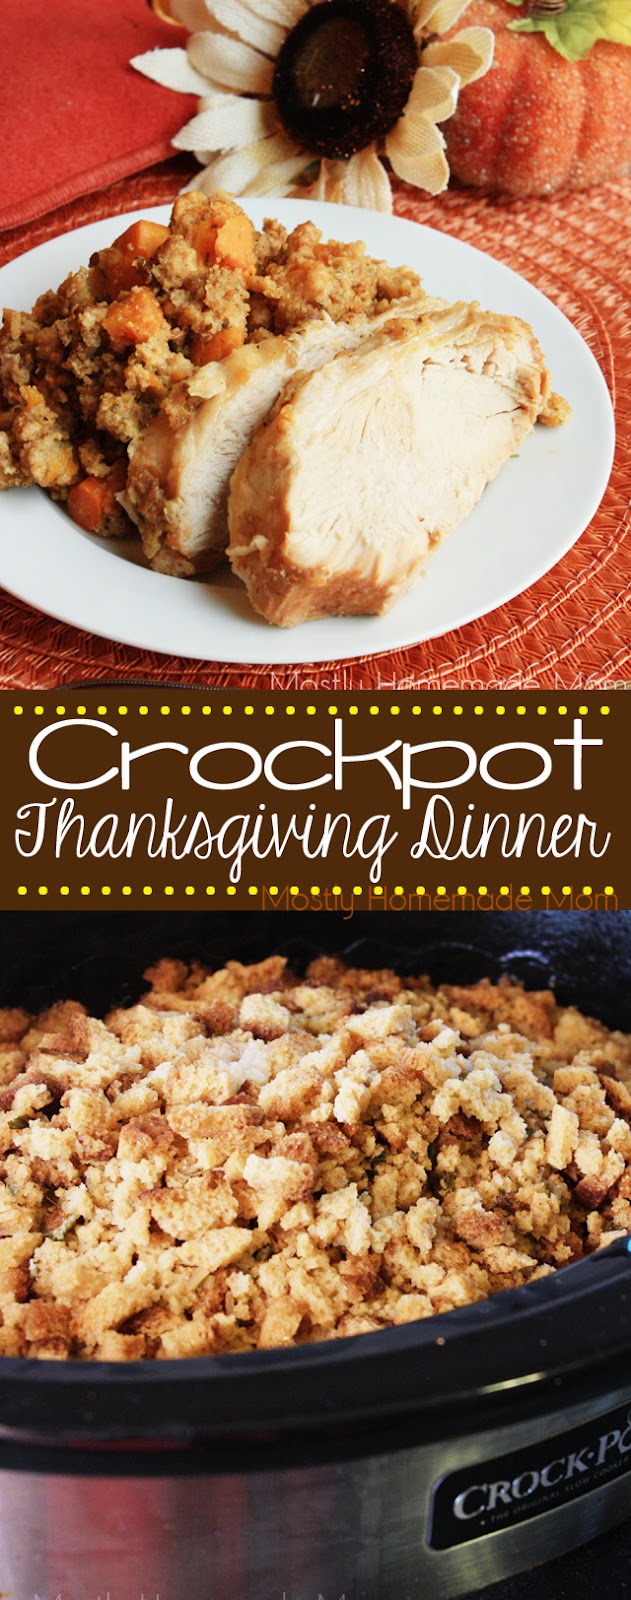 Crockpot Thanksgiving Dinner - RECIPE VIDEO | Mostly Homemade Mom